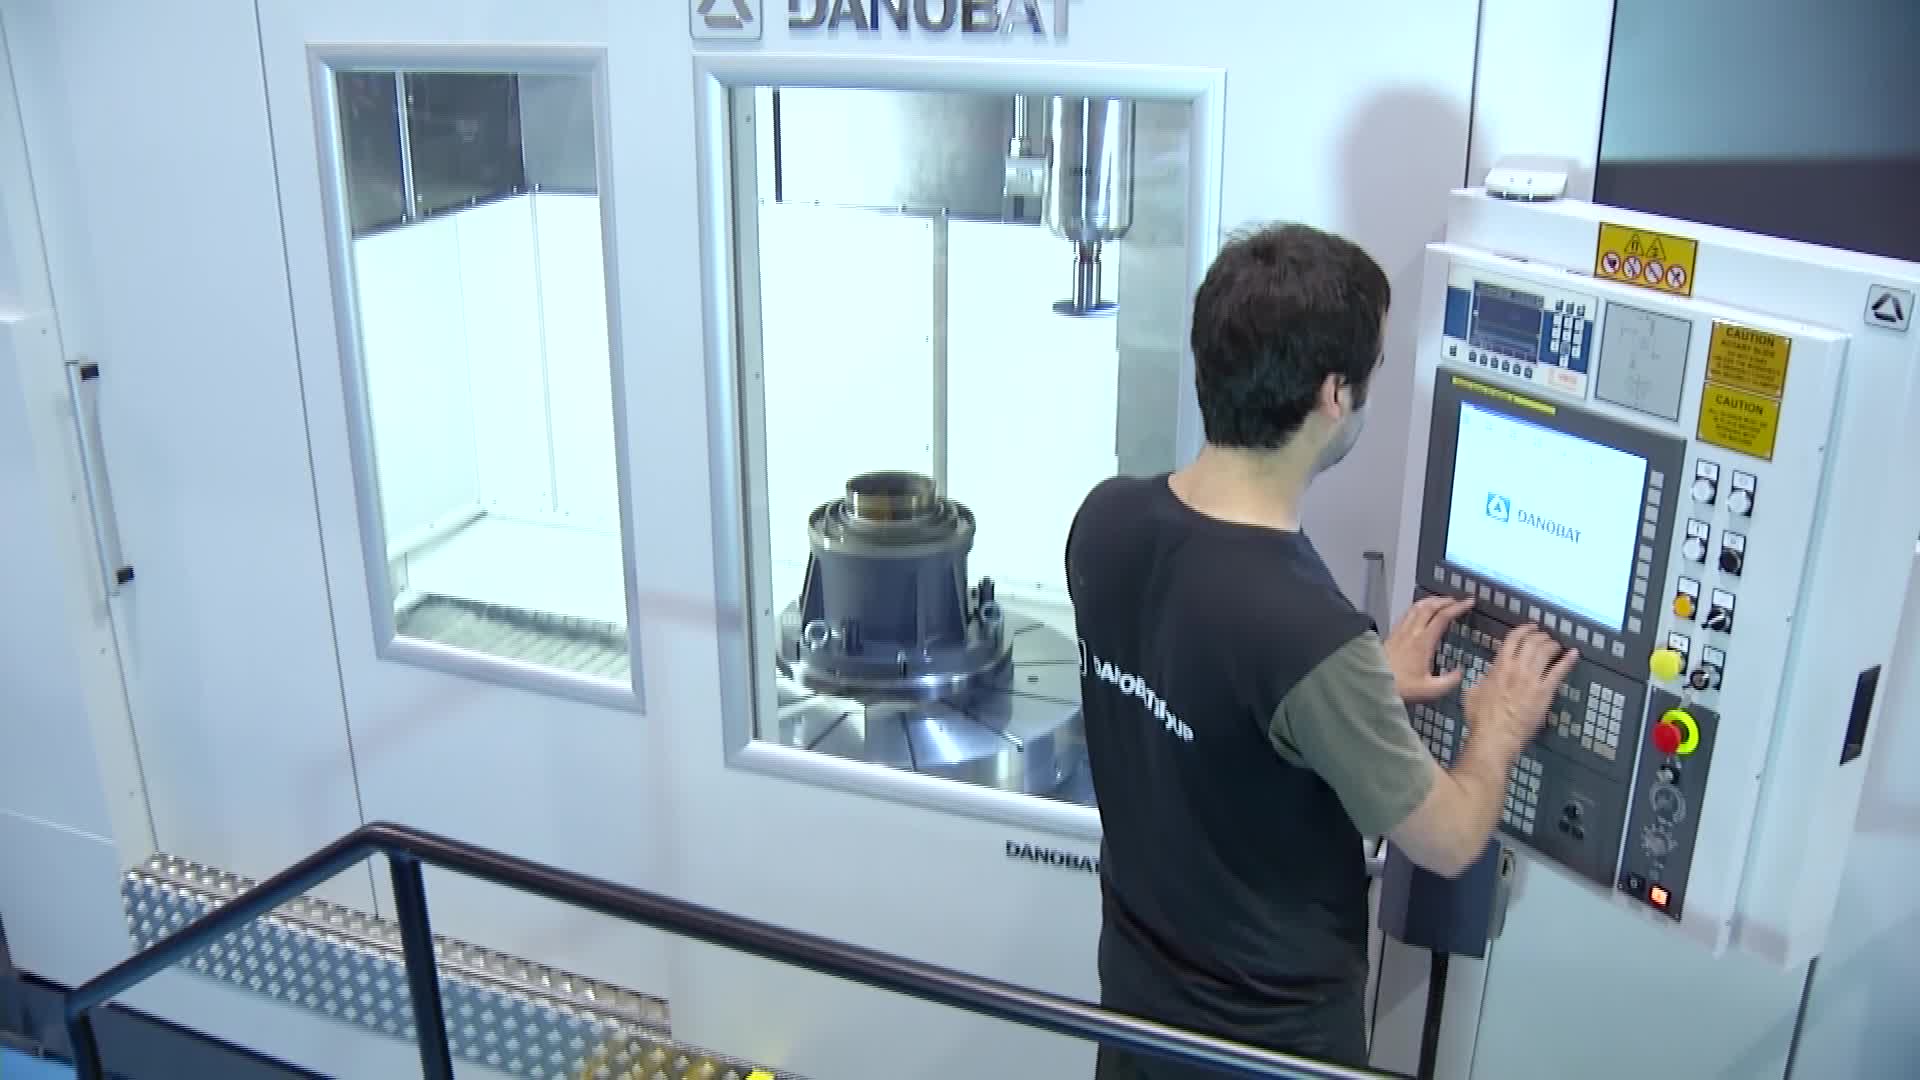 DANOBAT VG - Vertical grinding machine